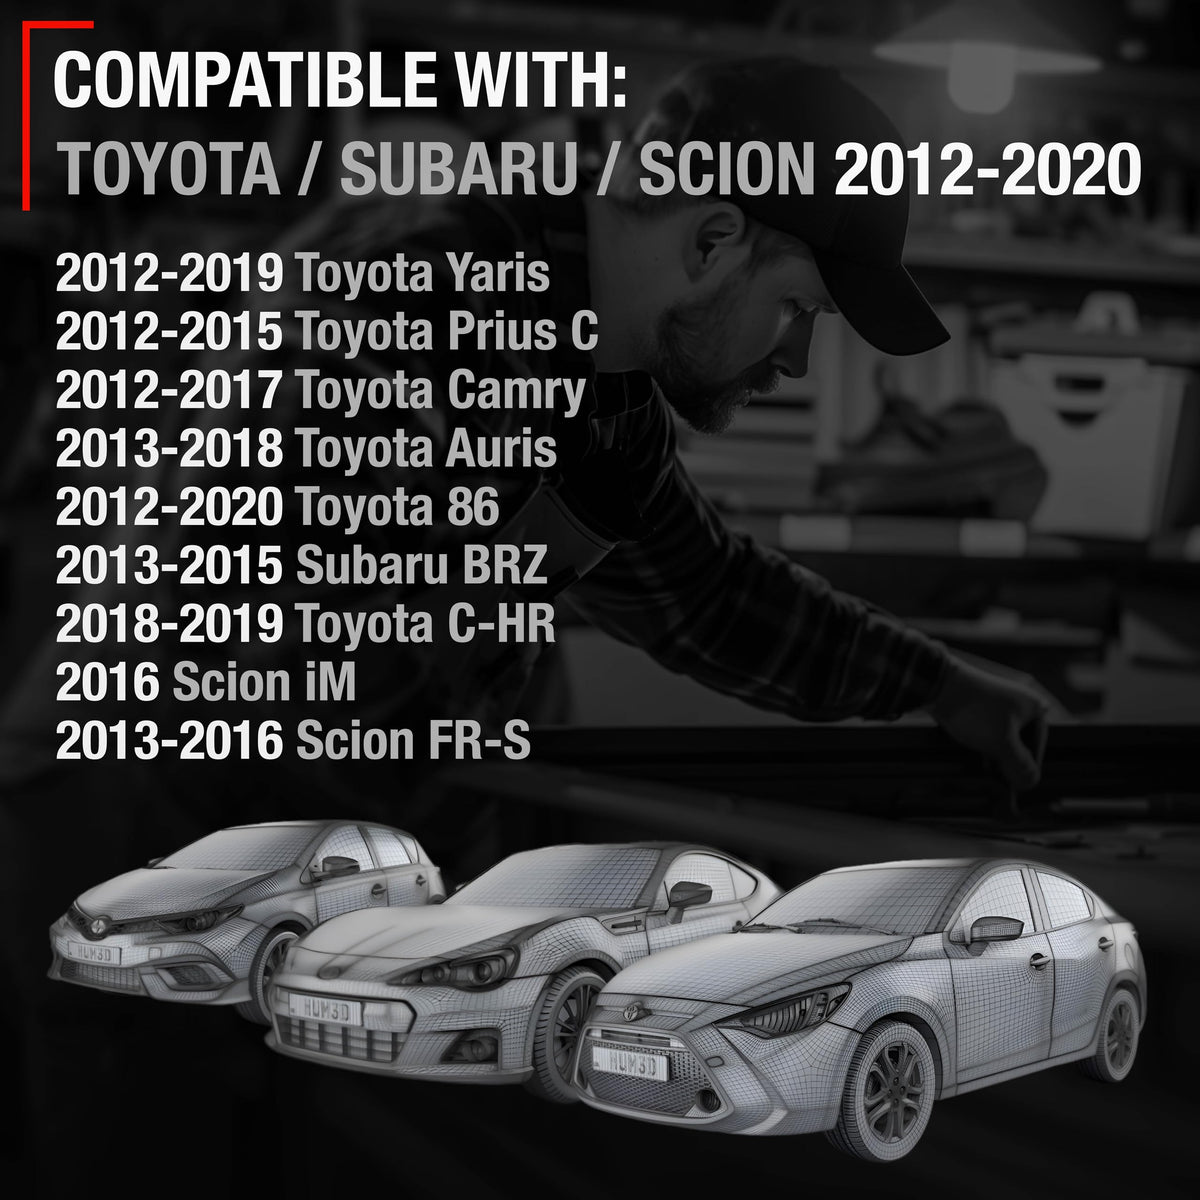 Exterior Door Handle Set, Front Left & Right - Compatible with 2012-2020 Toyota Yaris, Prius C, Camry, Auris, 86, C-HR; 2013-2015 Subaru BRZ; 2016 Scion FR-S, Scion iM - Primed Black - OEM 6921106090